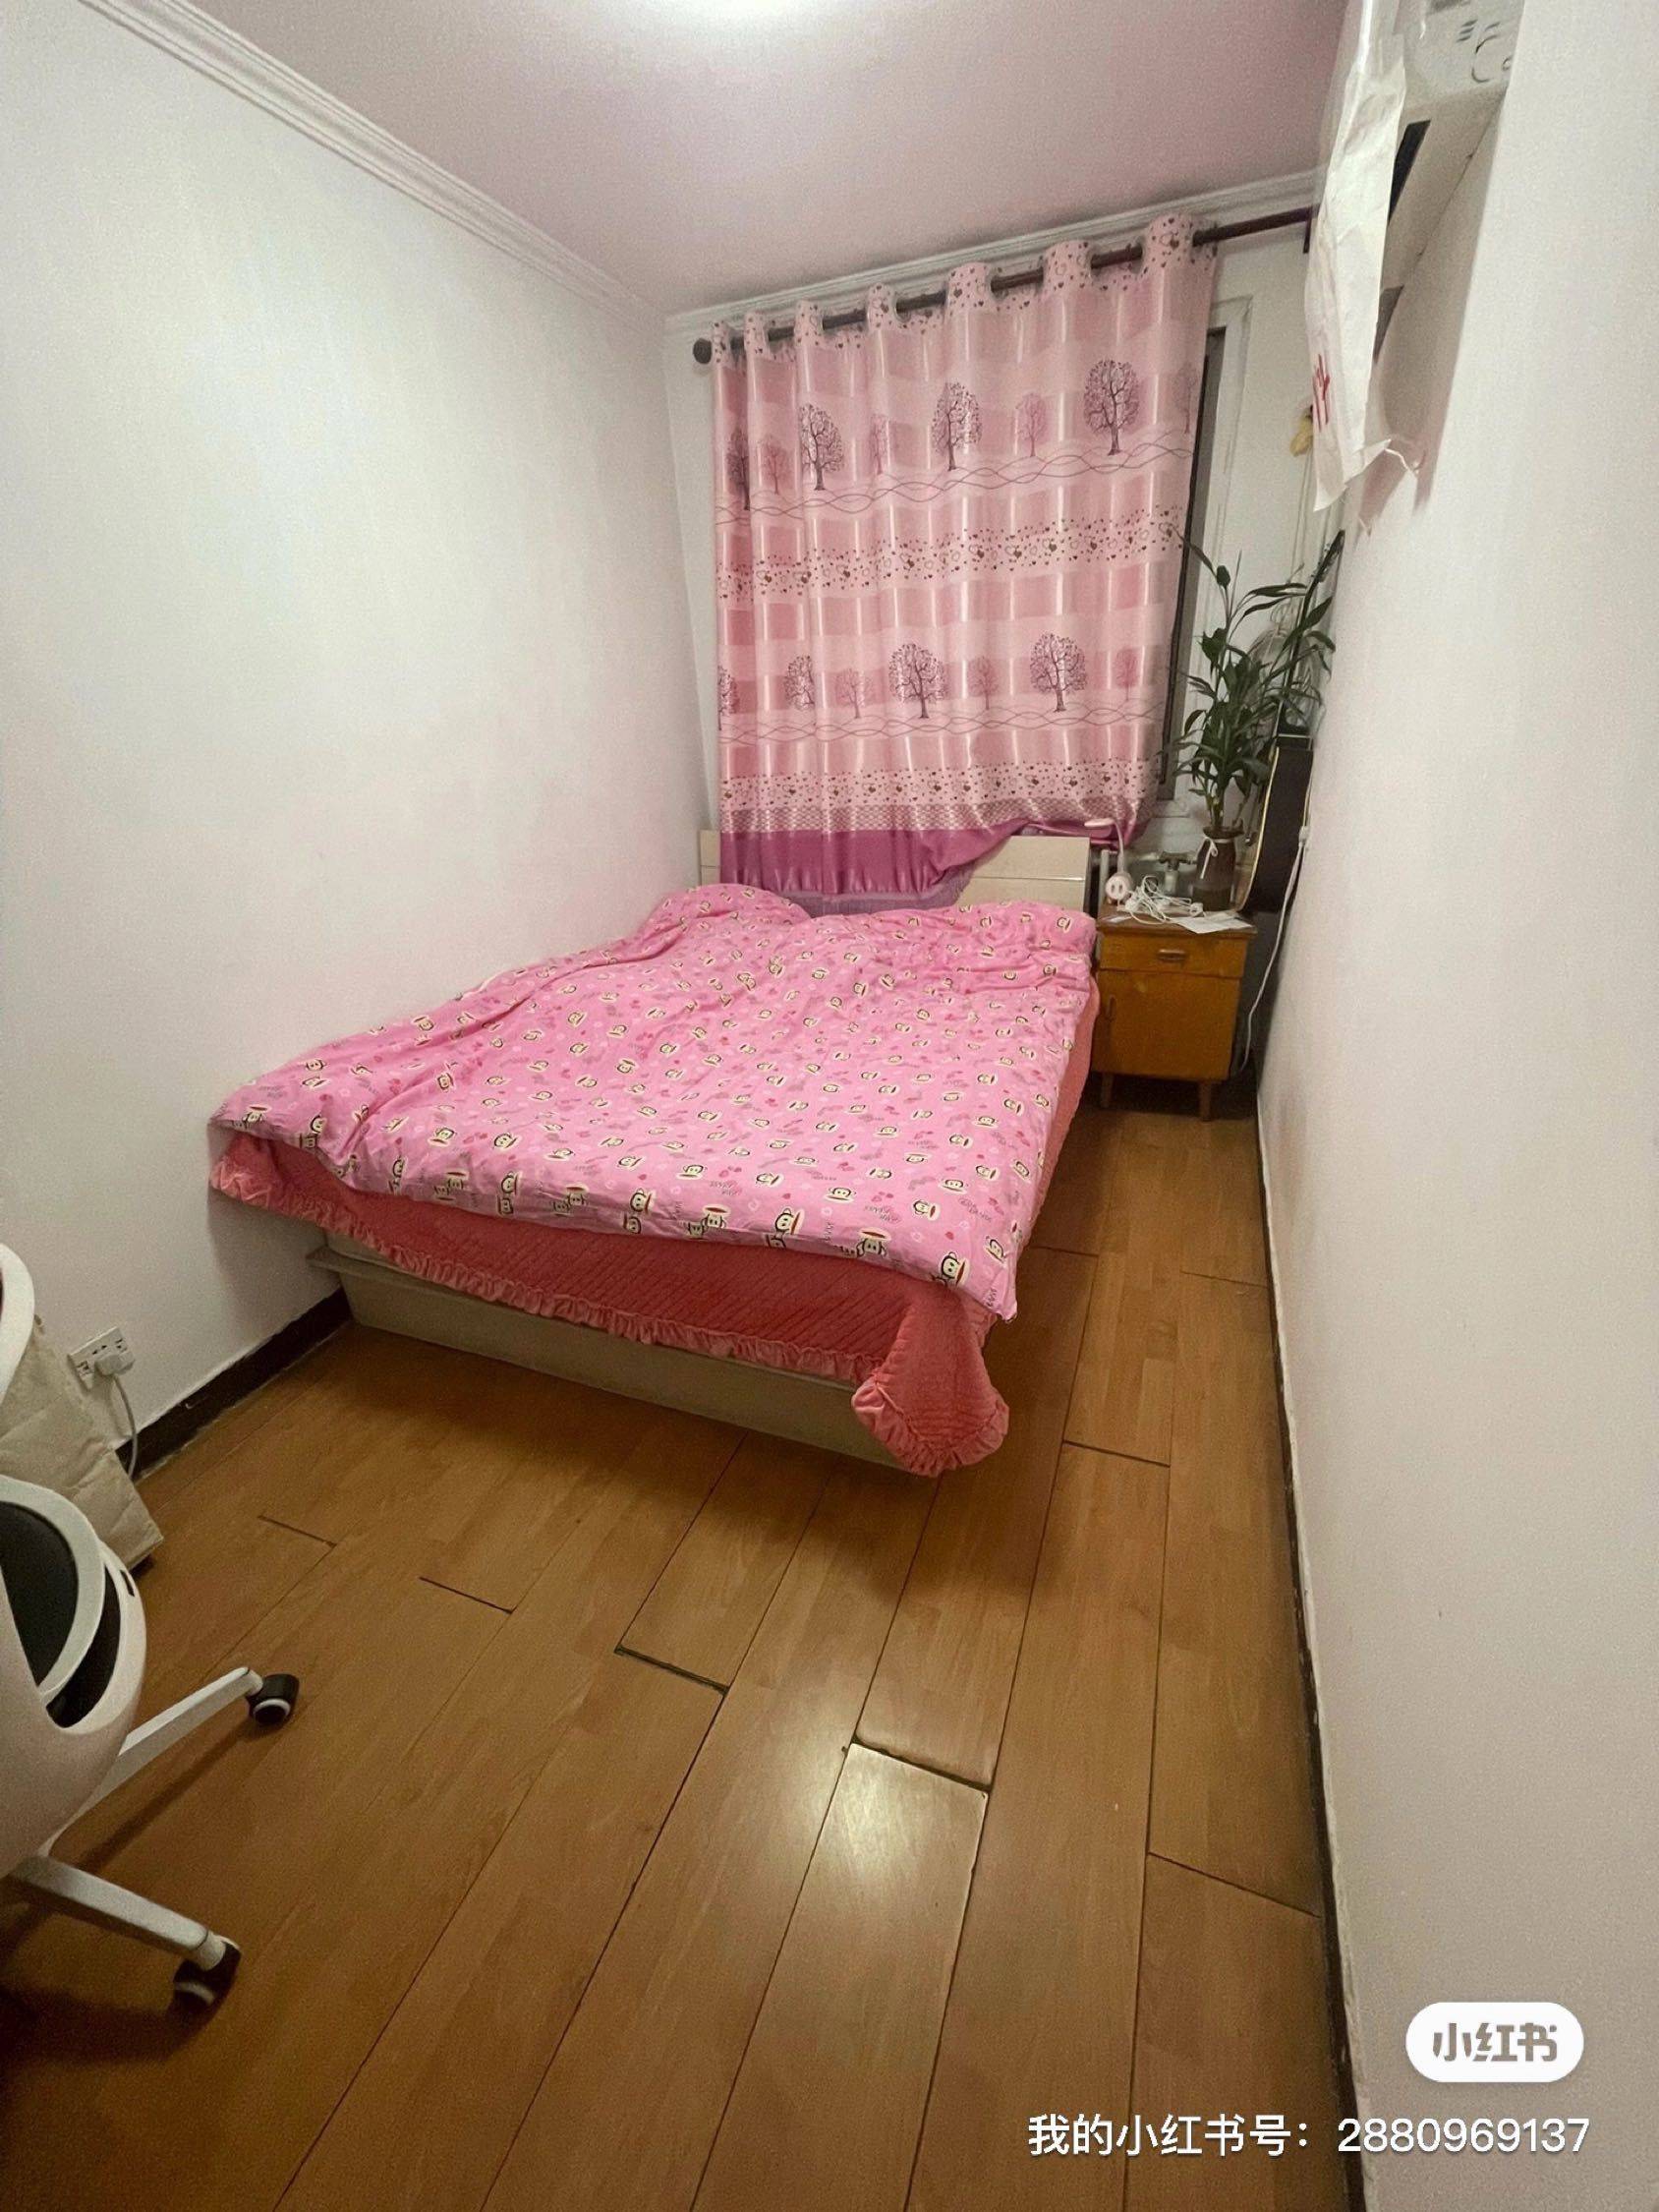 Beijing-Tongzhou-Cozy Home,Clean&Comfy,No Gender Limit,LGBTQ Friendly